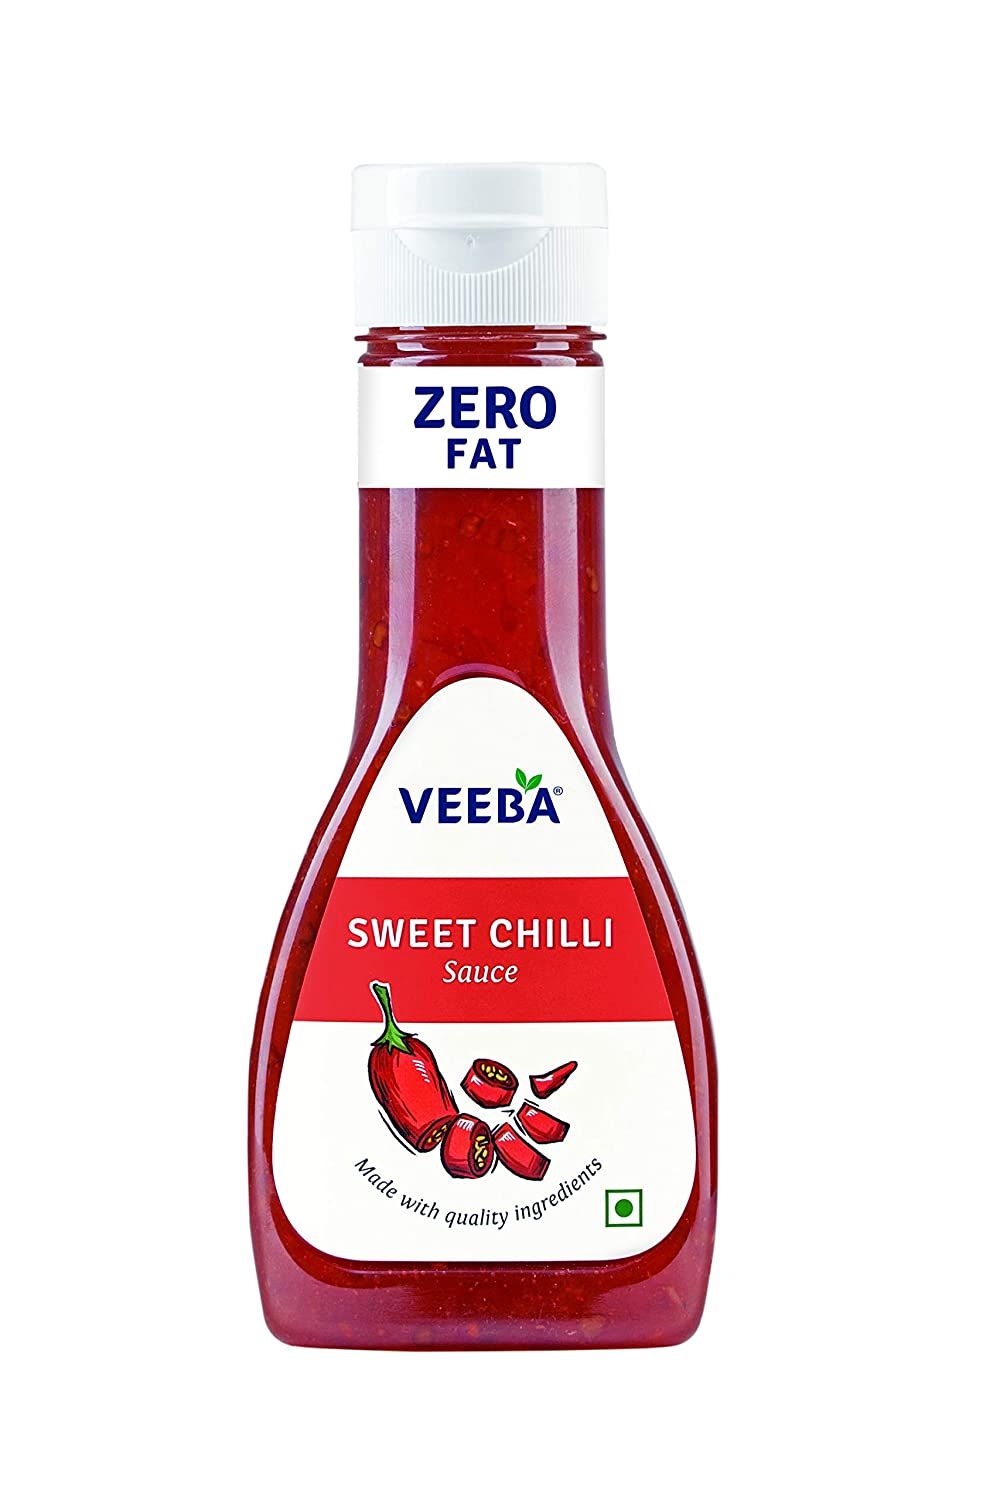 Veeba Sweet Chilli Sauce Image